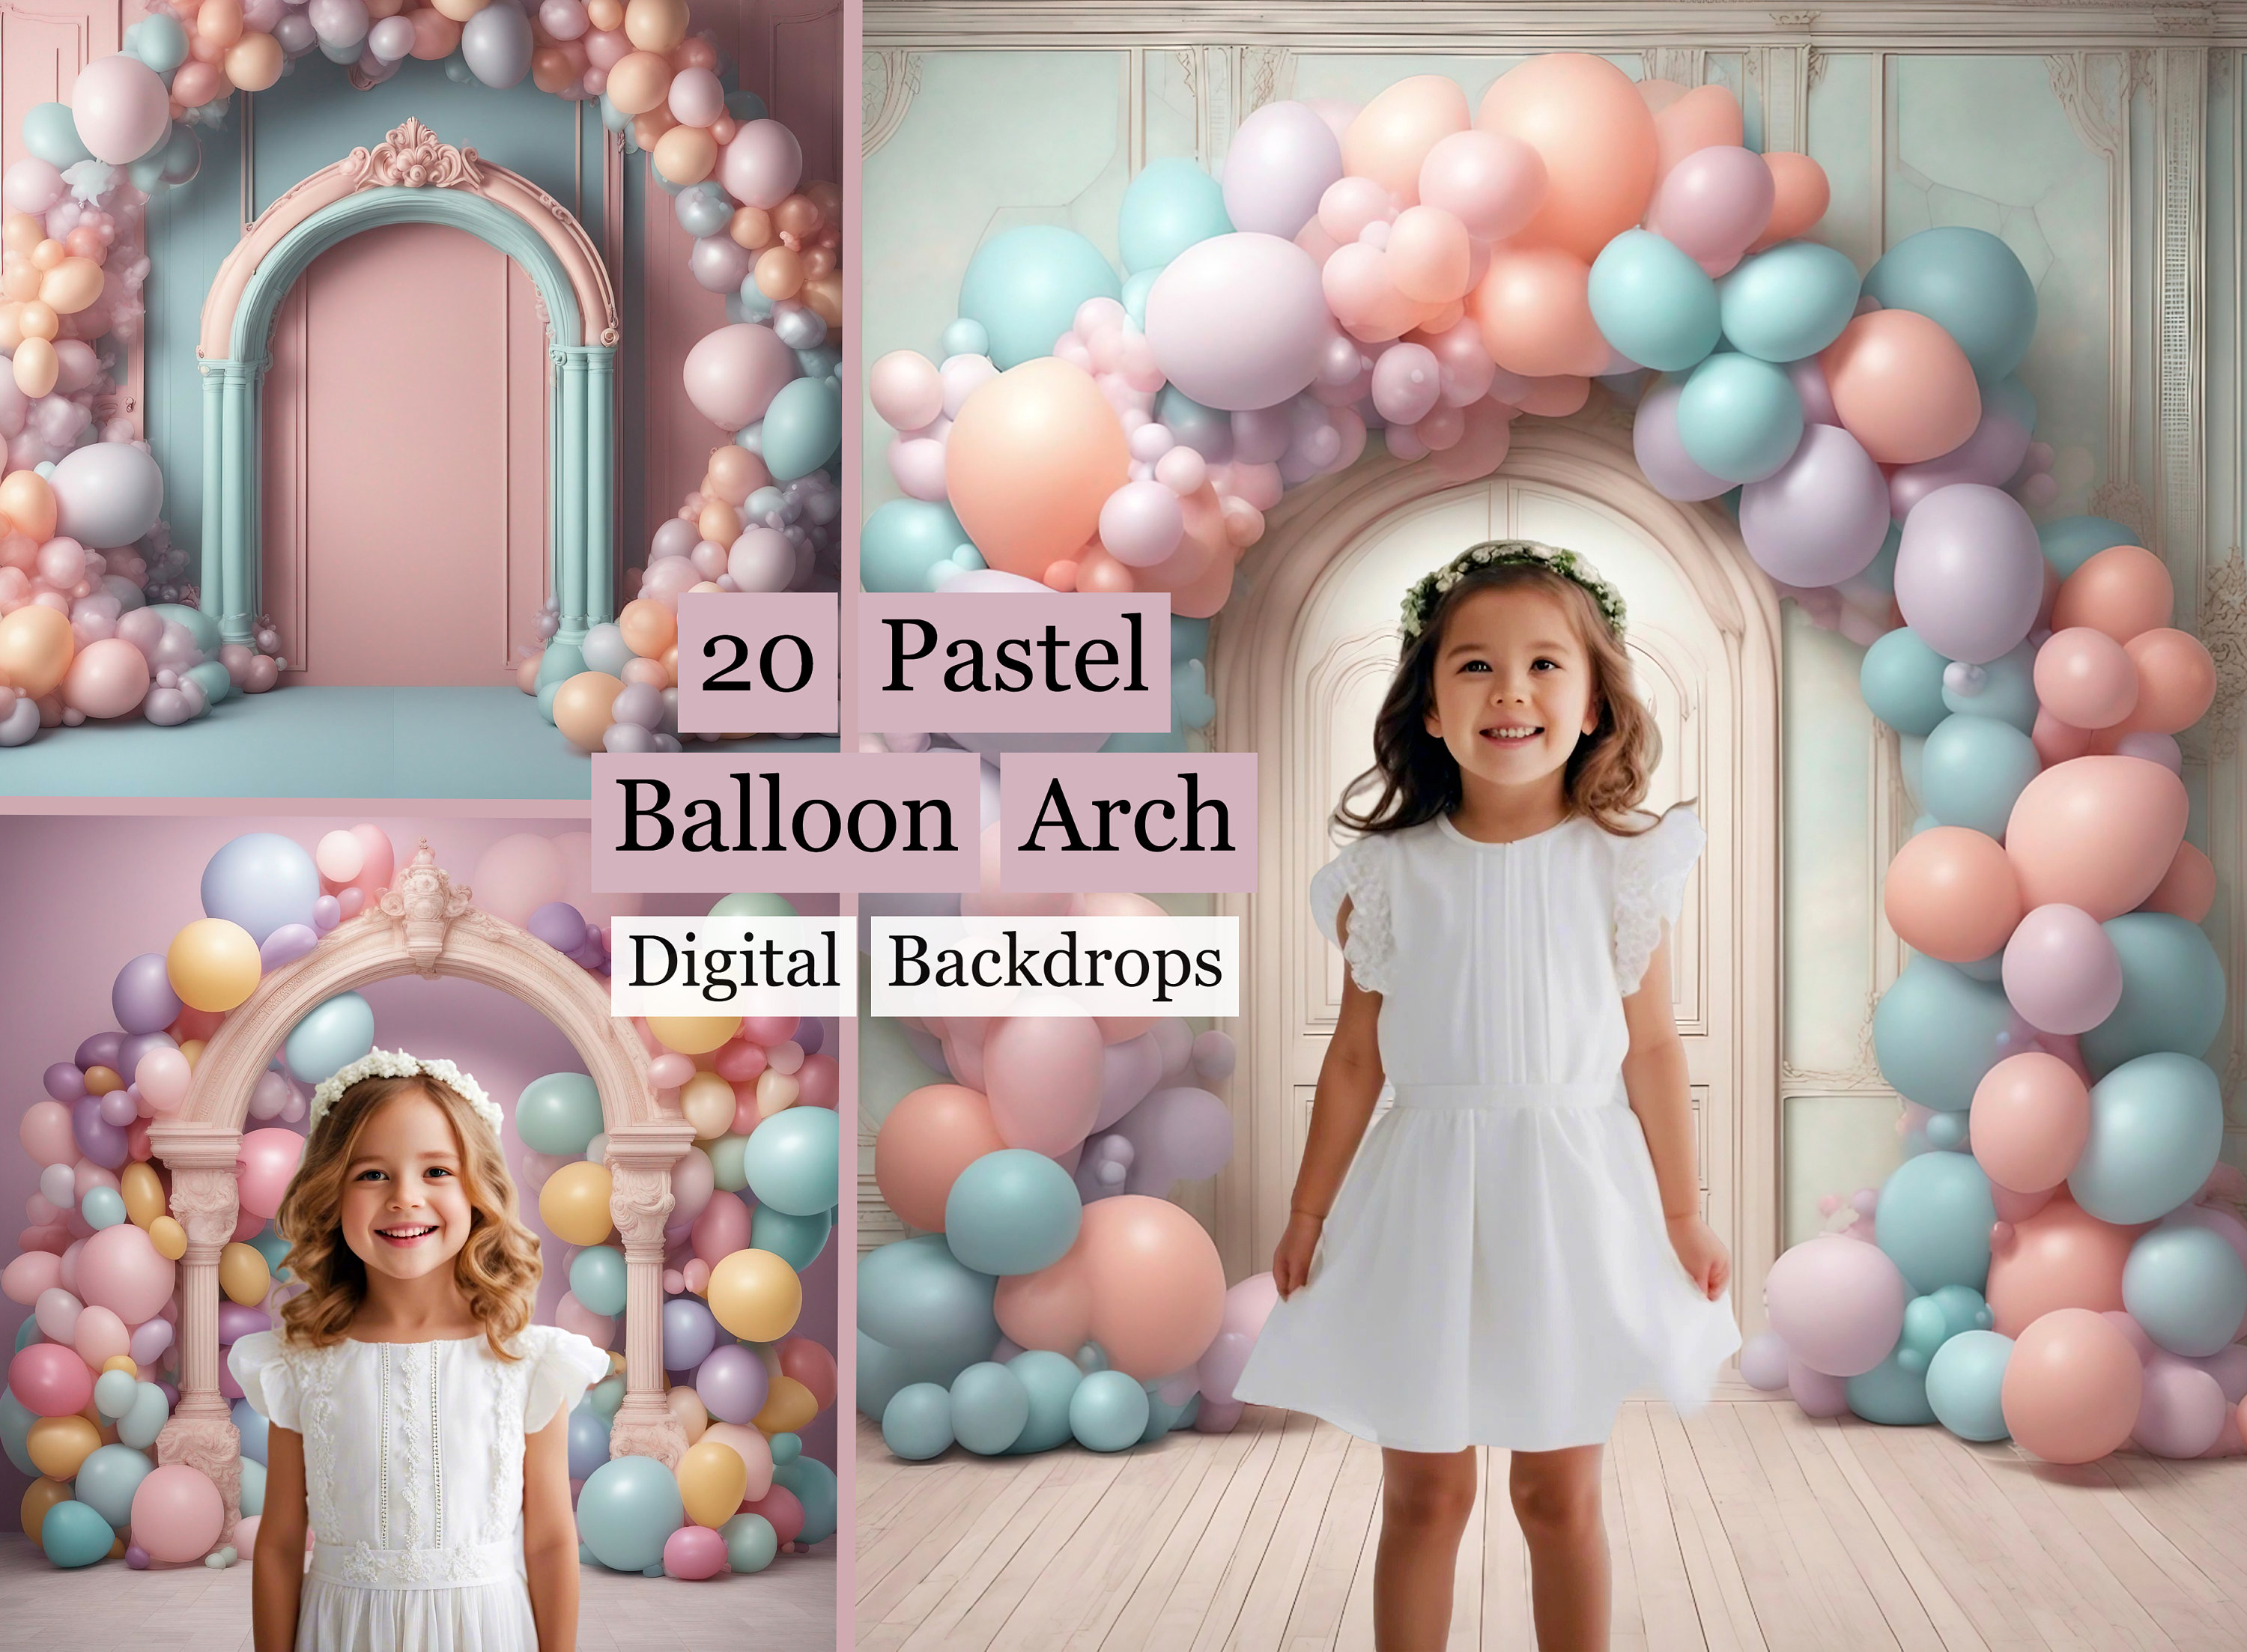 Pastel Balloon Garland - Pastel Birthday Decorations, Pastel Balloon Arch,  Pastel Party Decorations, Pastel Rainbow Birthday, Balloon Decor